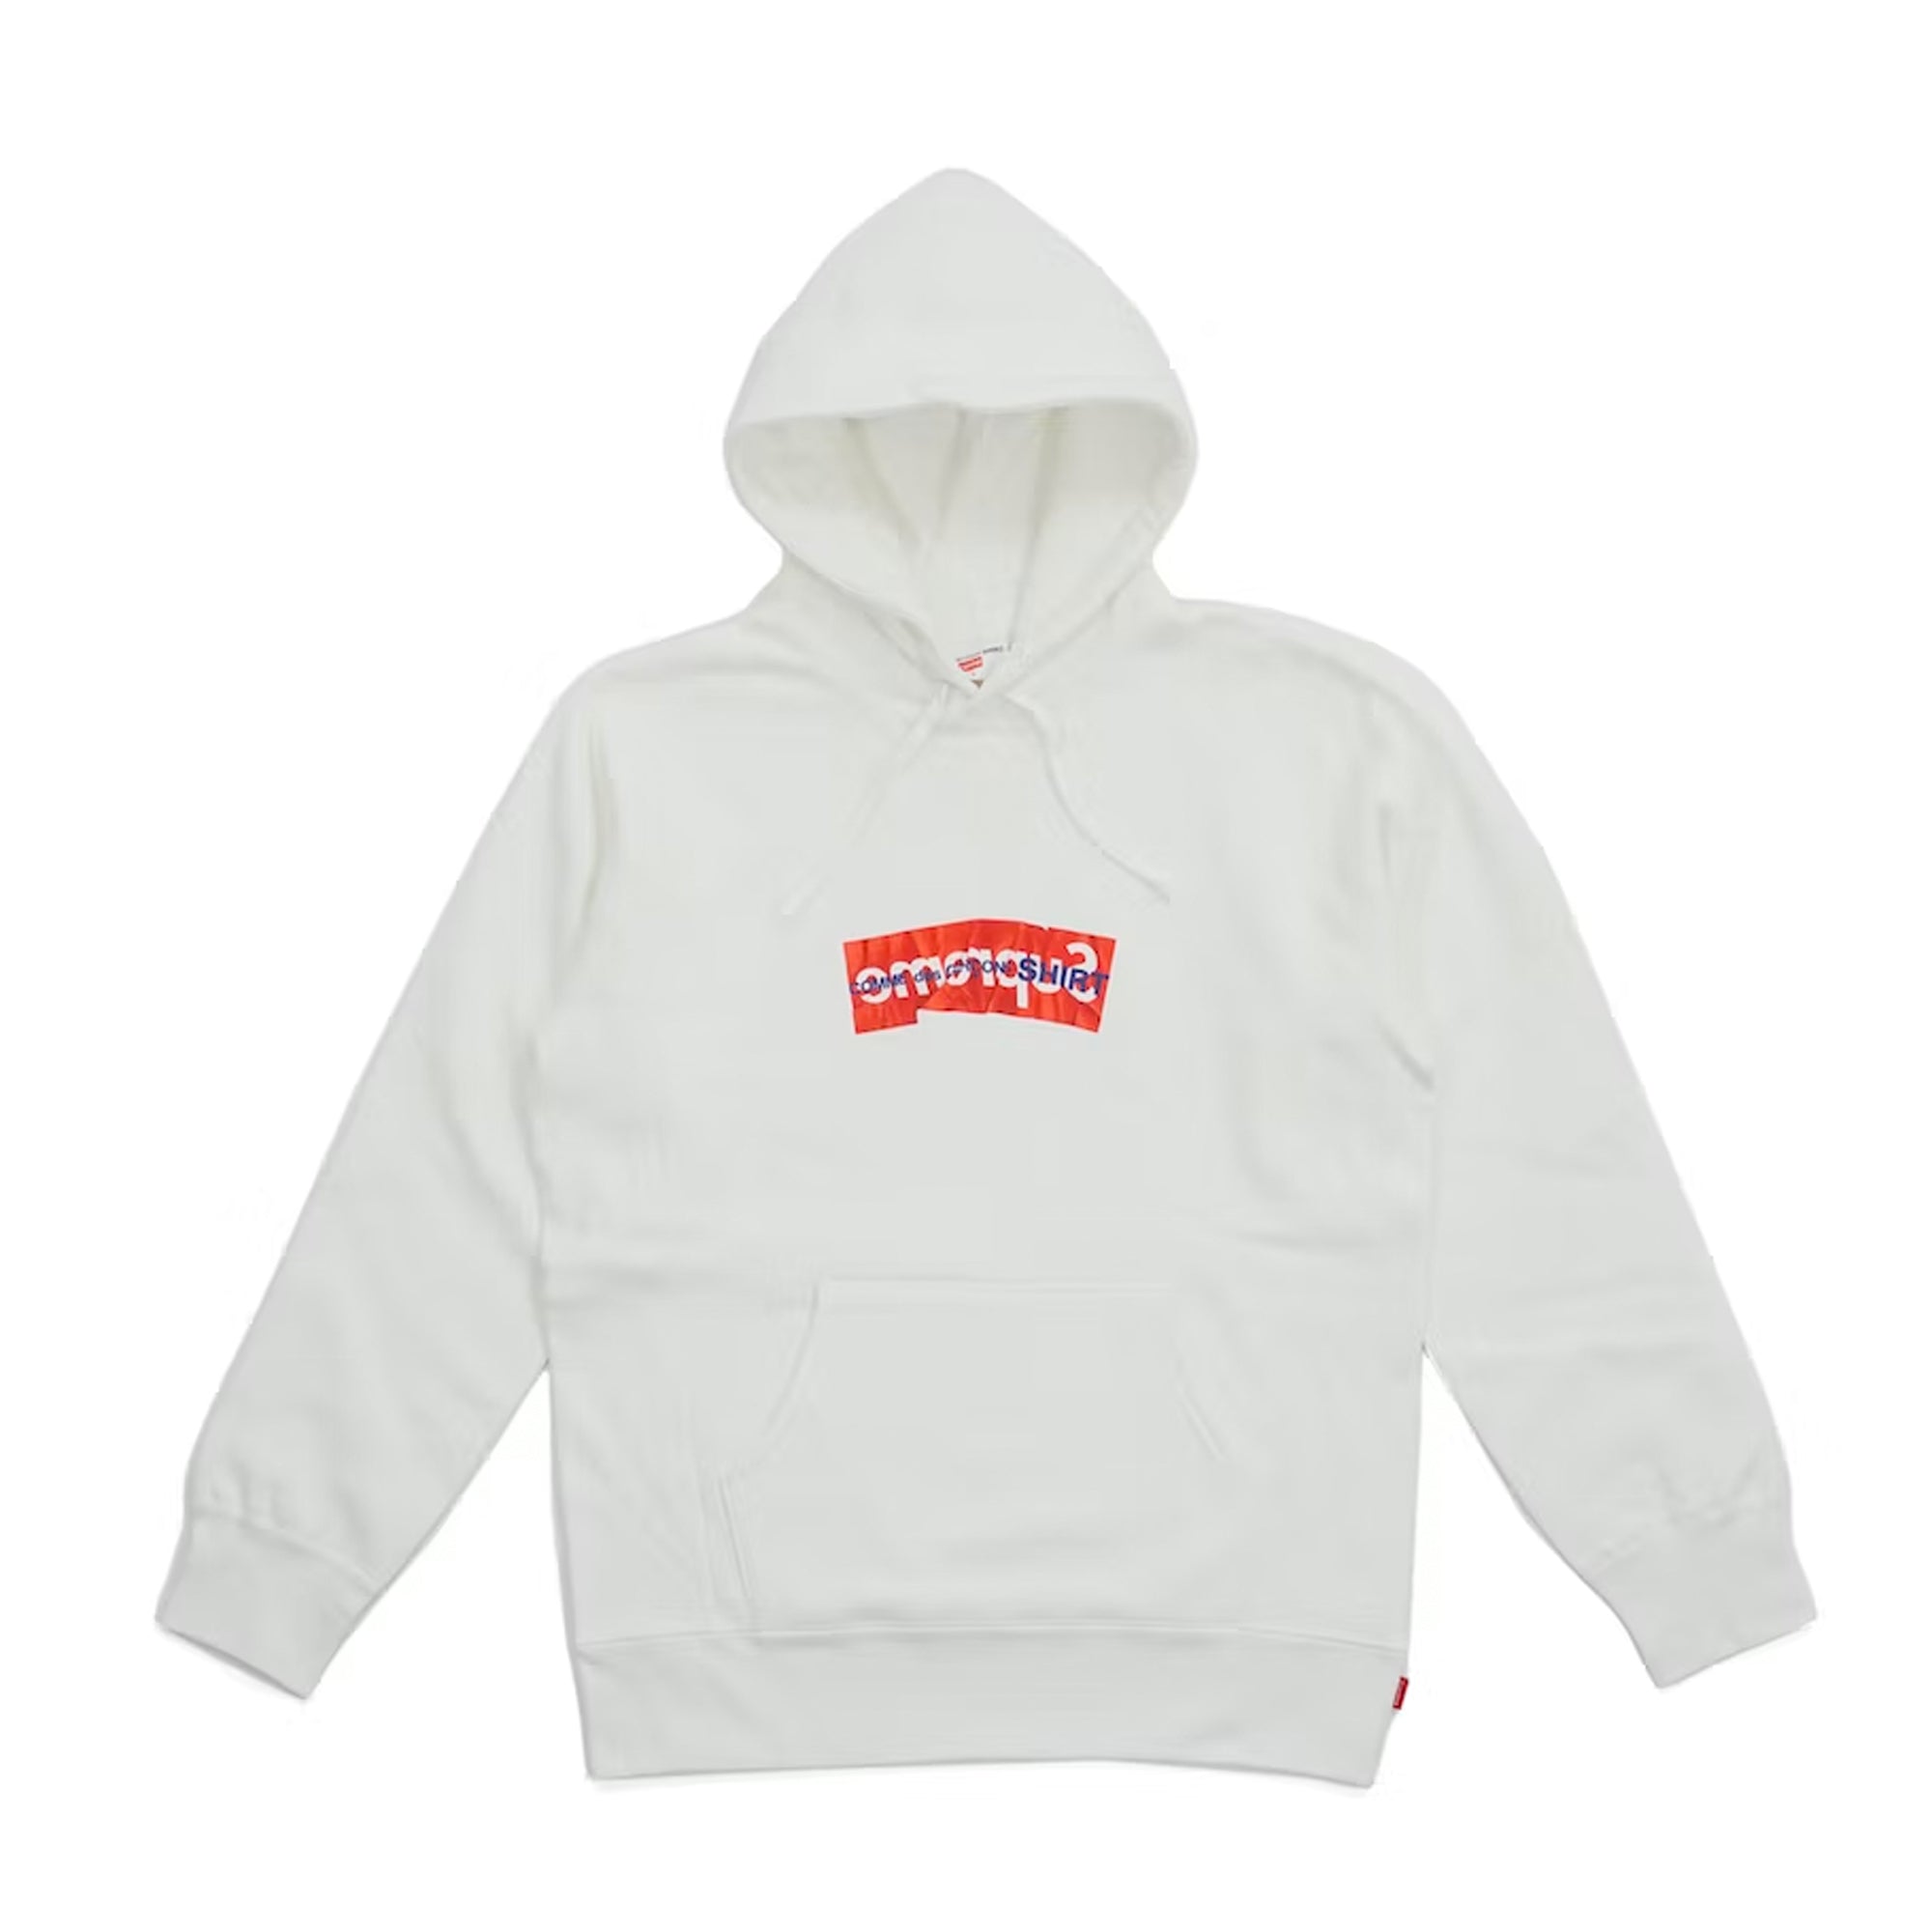 Supreme Box Logo Hooded Sweatshirt (FW21) Charcoal | PLUS